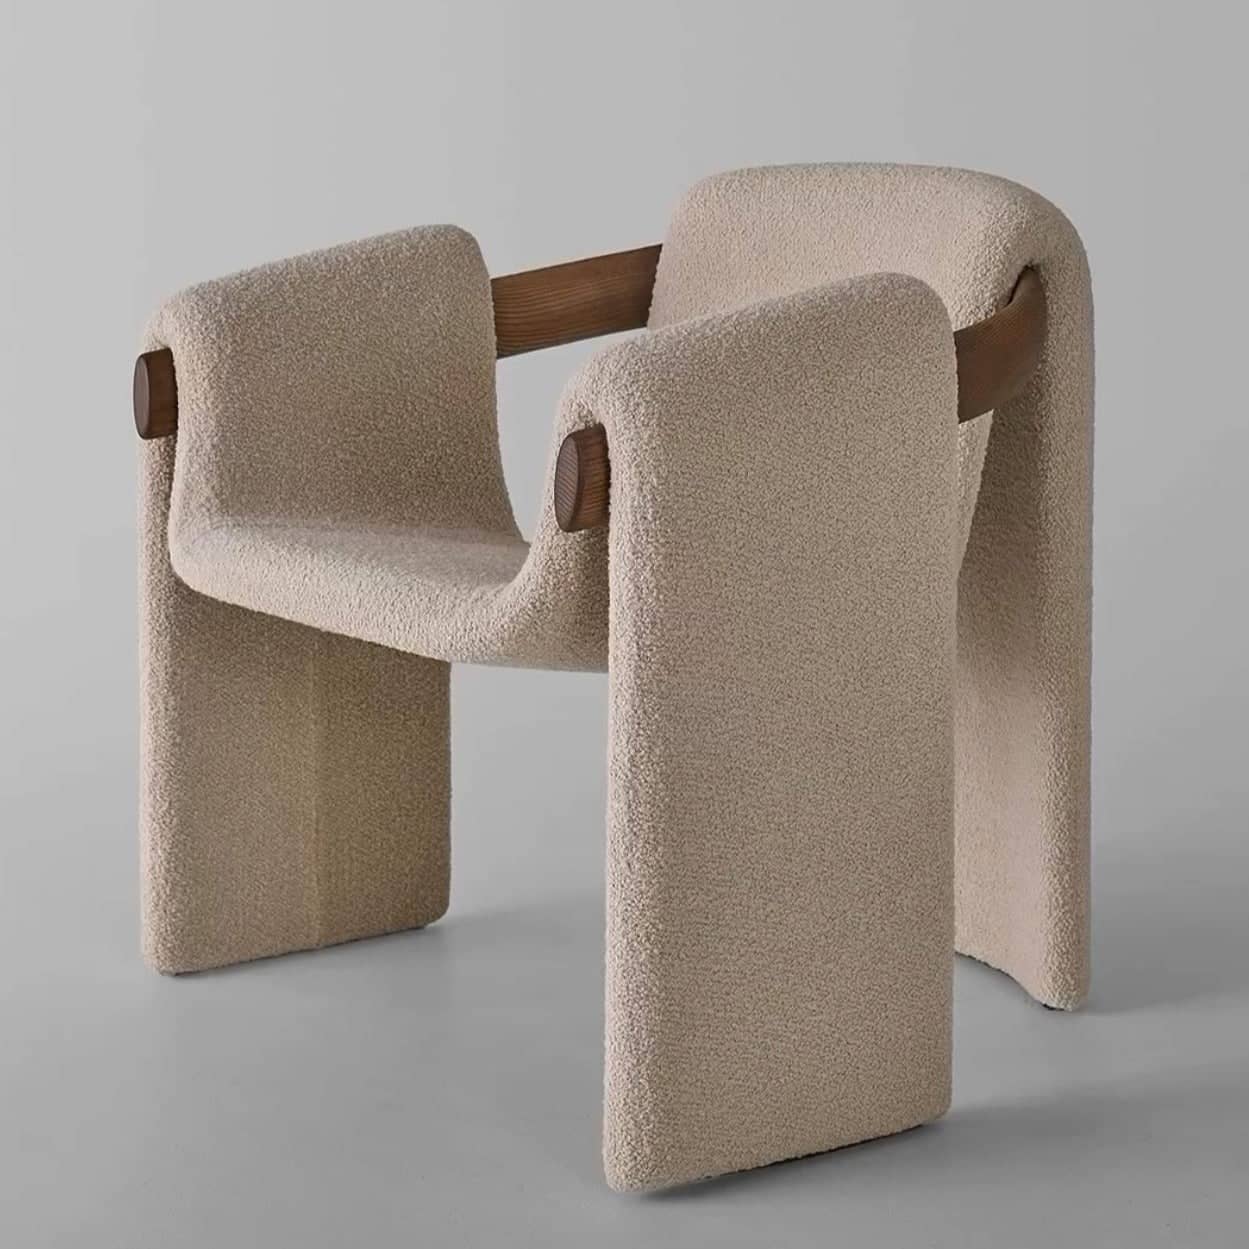 كرسي بتصميم مبتكر فاخر - AMJAD-homznia